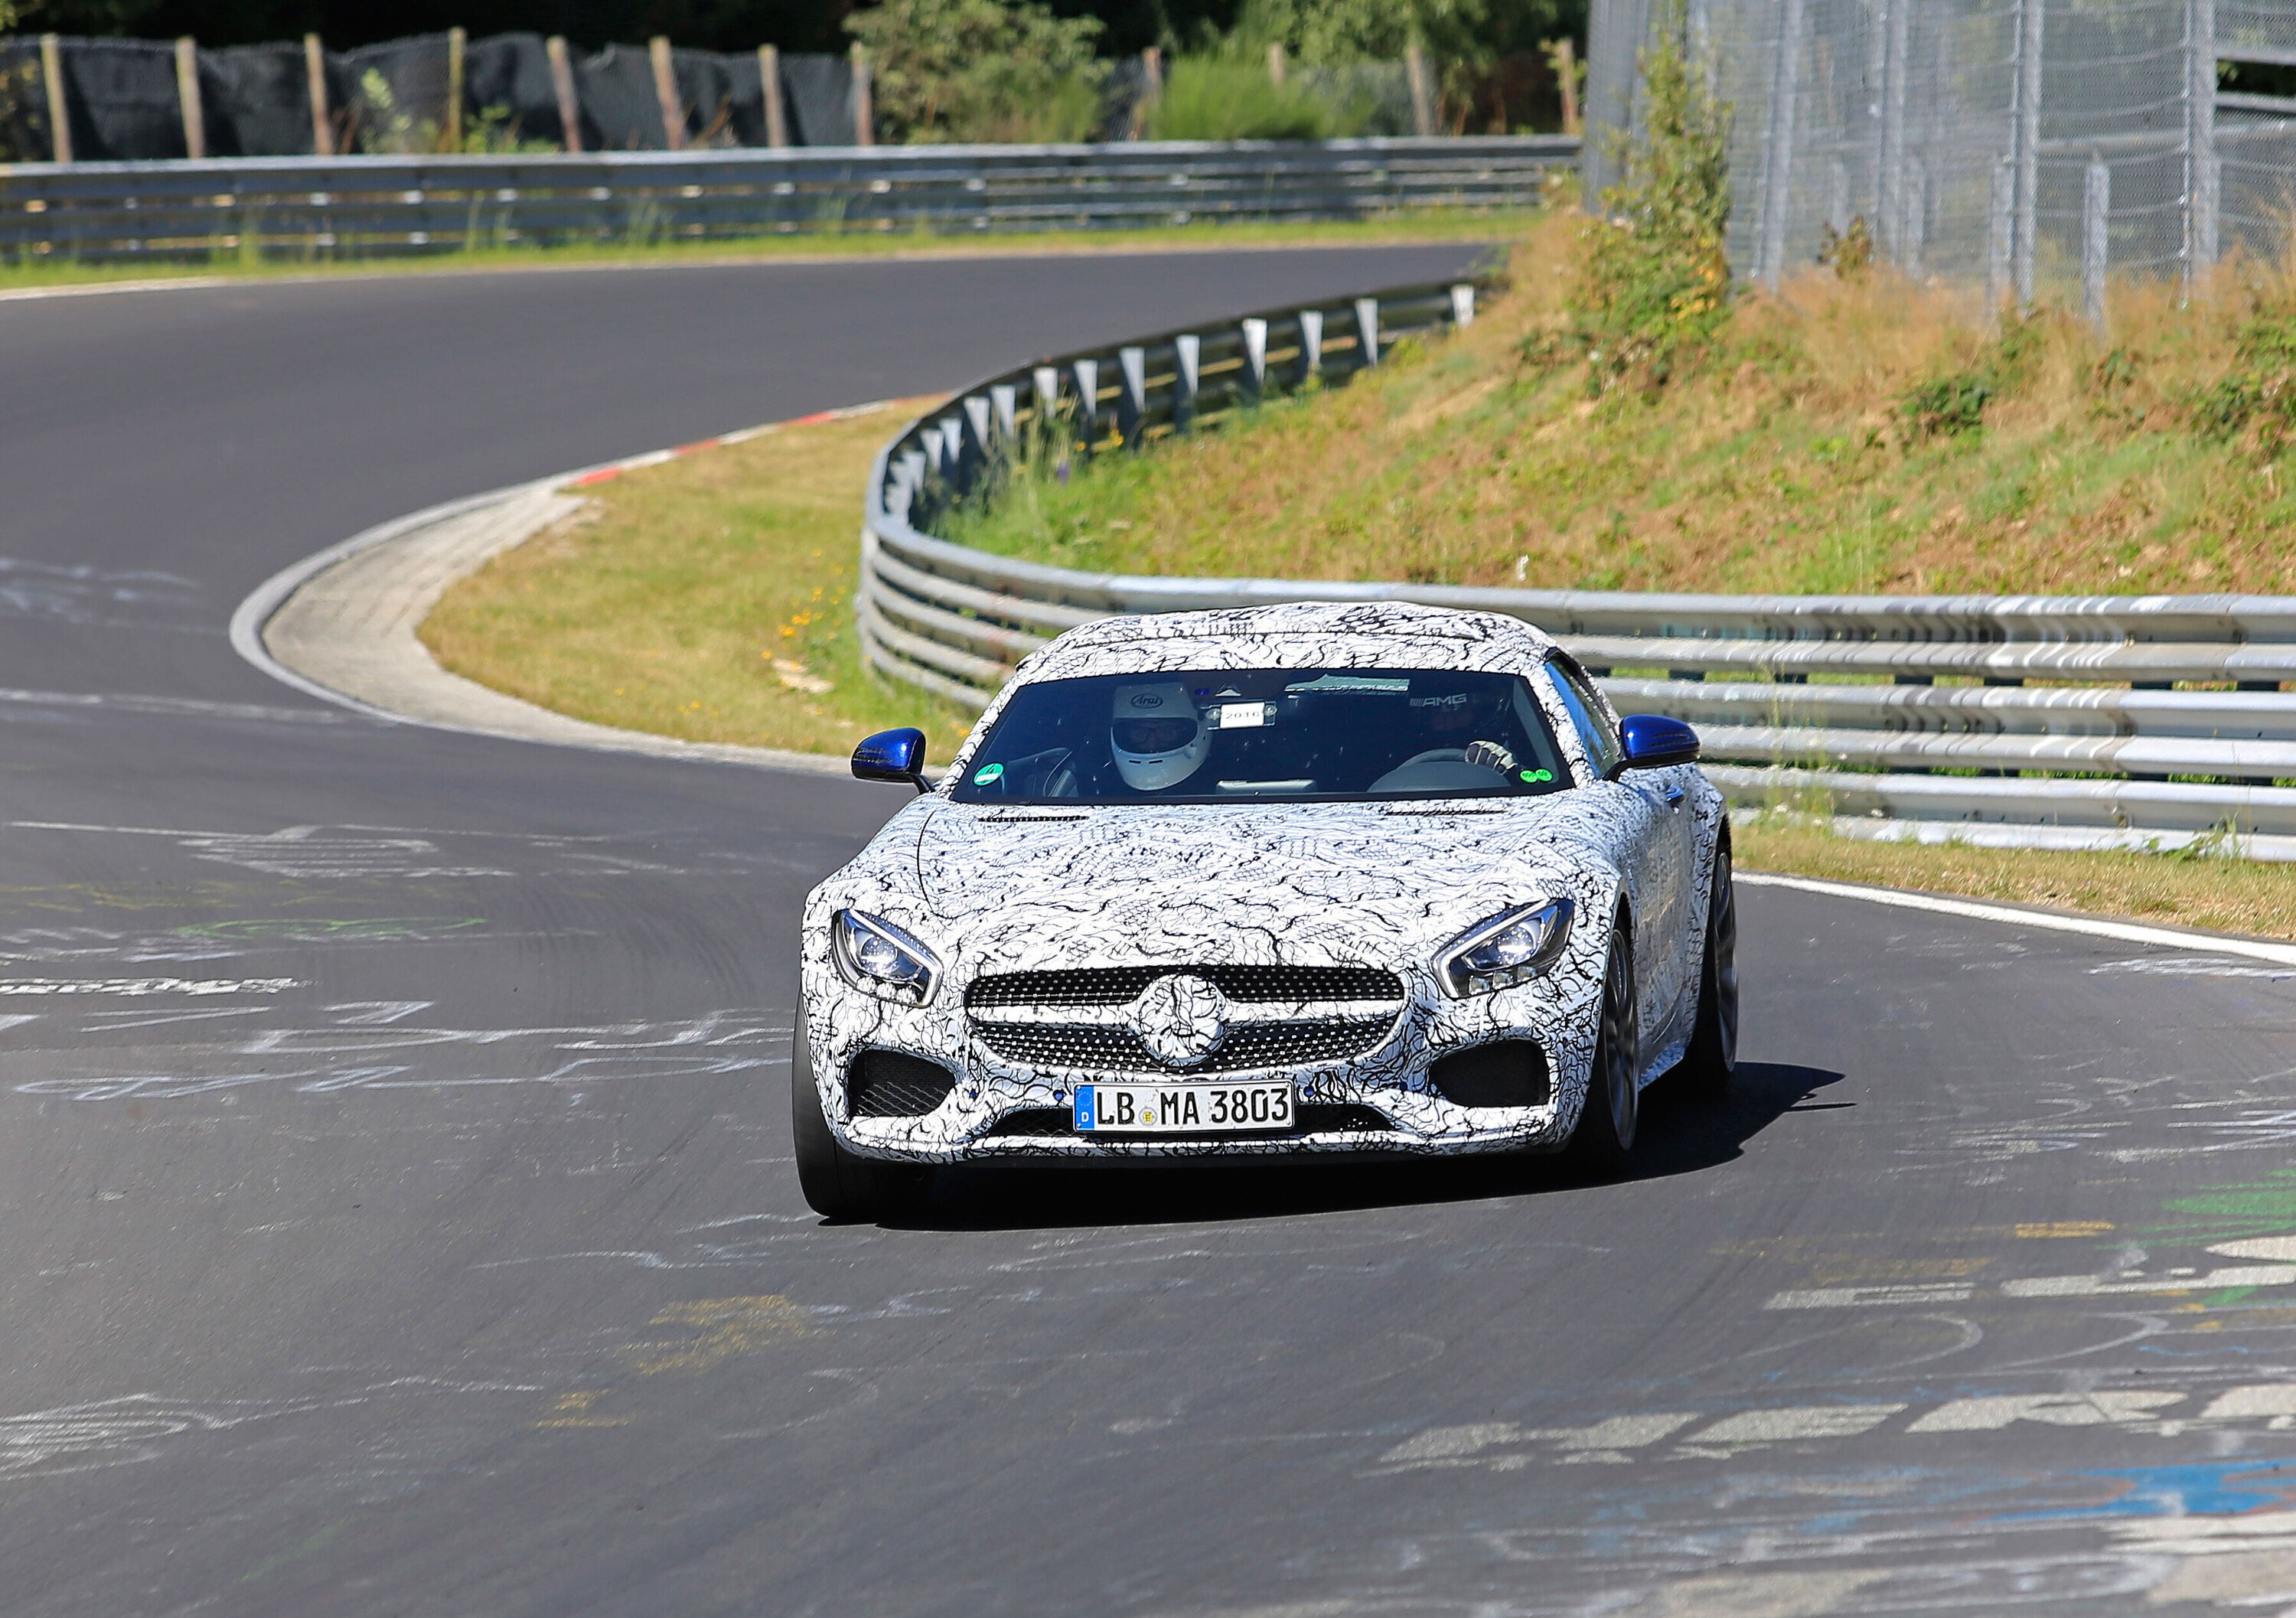 Nuova Mercedes AMG GT Roadster: nuovi test al Ring